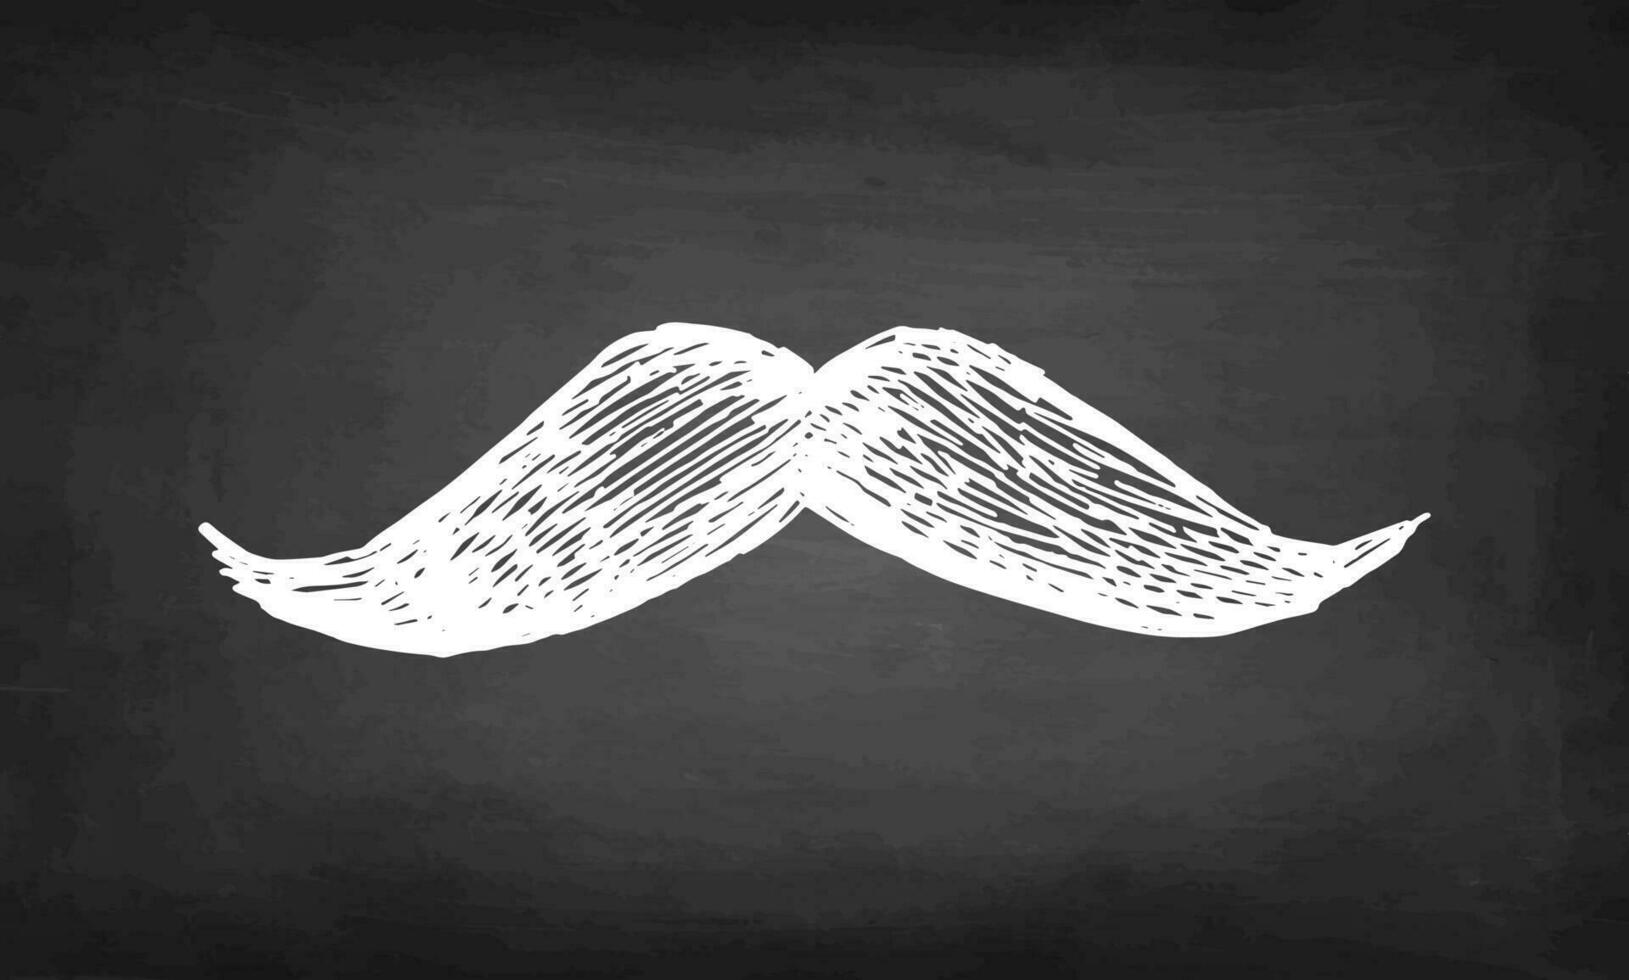 Mustache chalk sketch on blackboard background. Hand drawn vector illustration. Retro style.